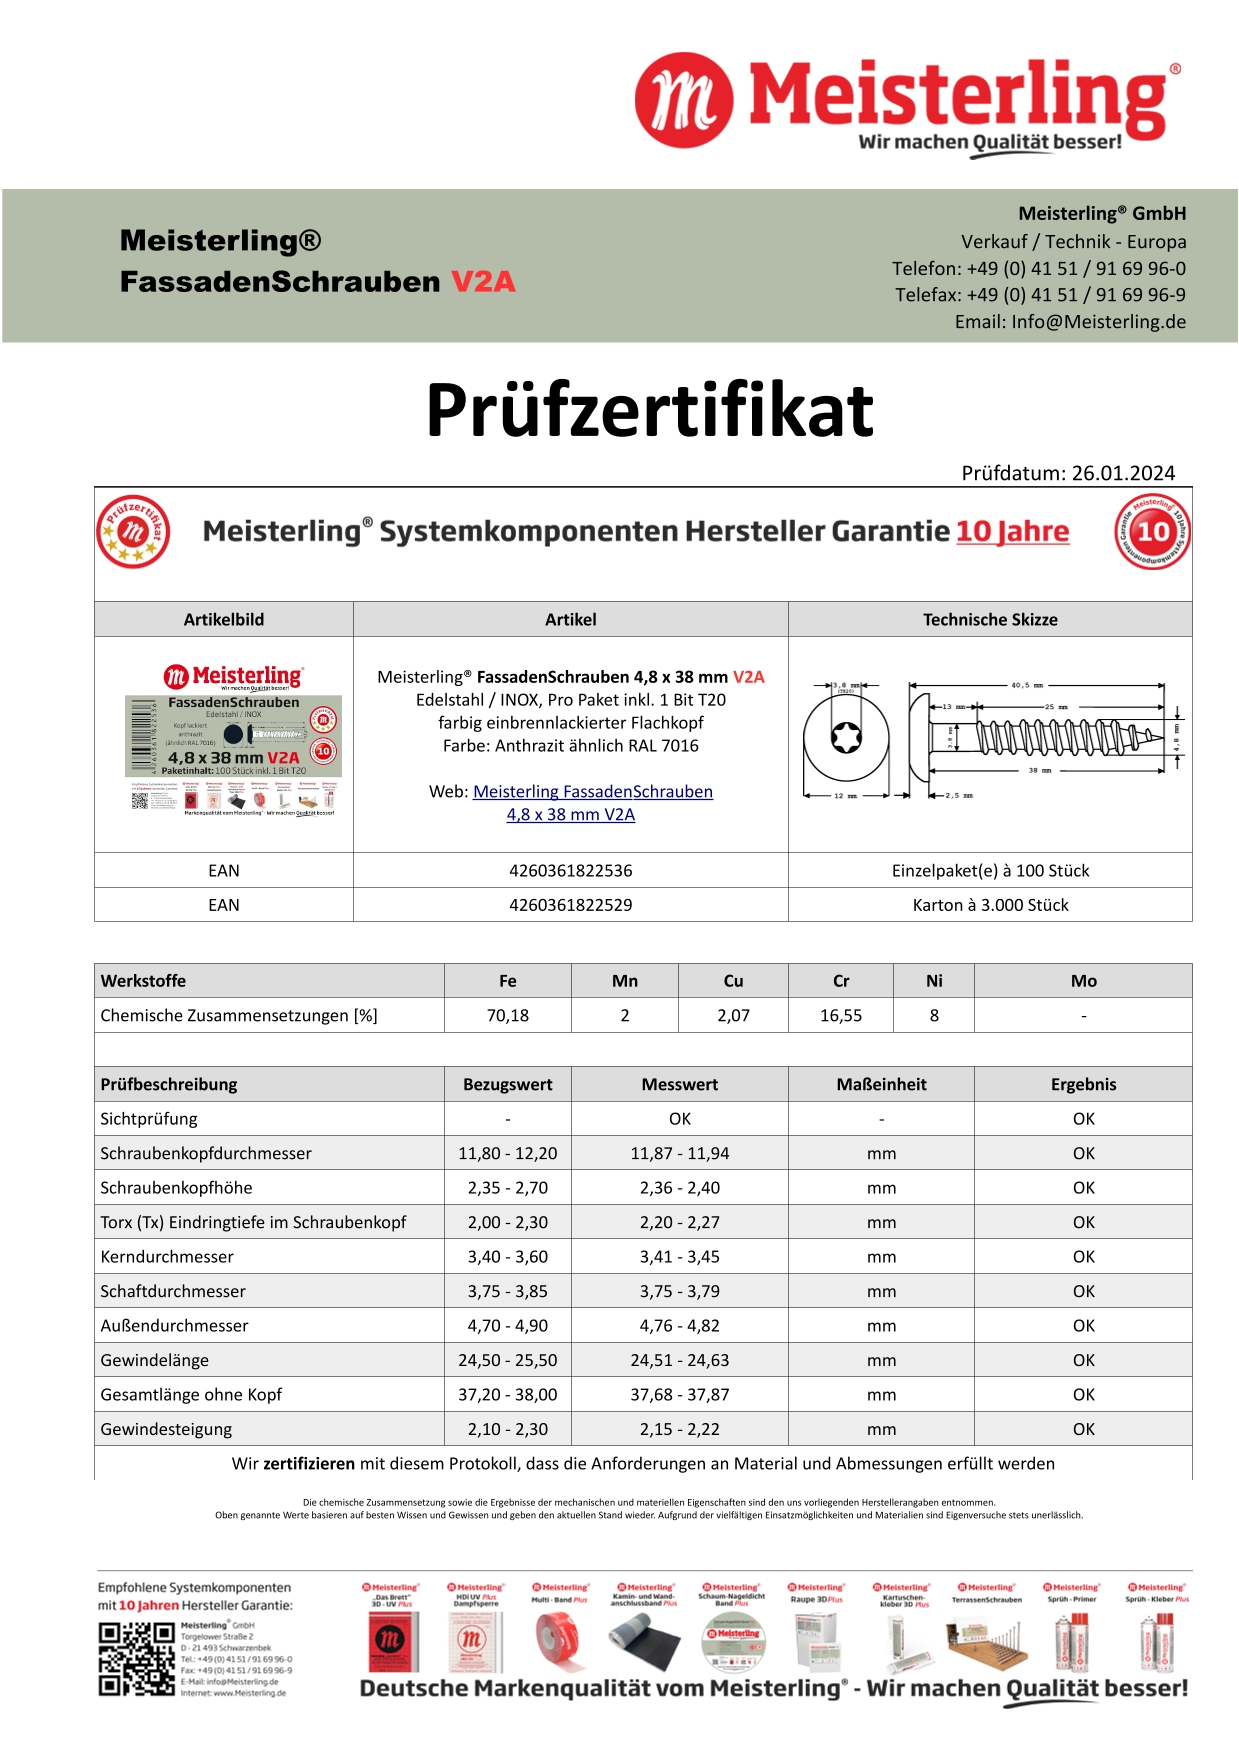 Prüfzertifikat Meisterling® FassadenSchrauben 4,8 x 38 mm V2a anthrazit